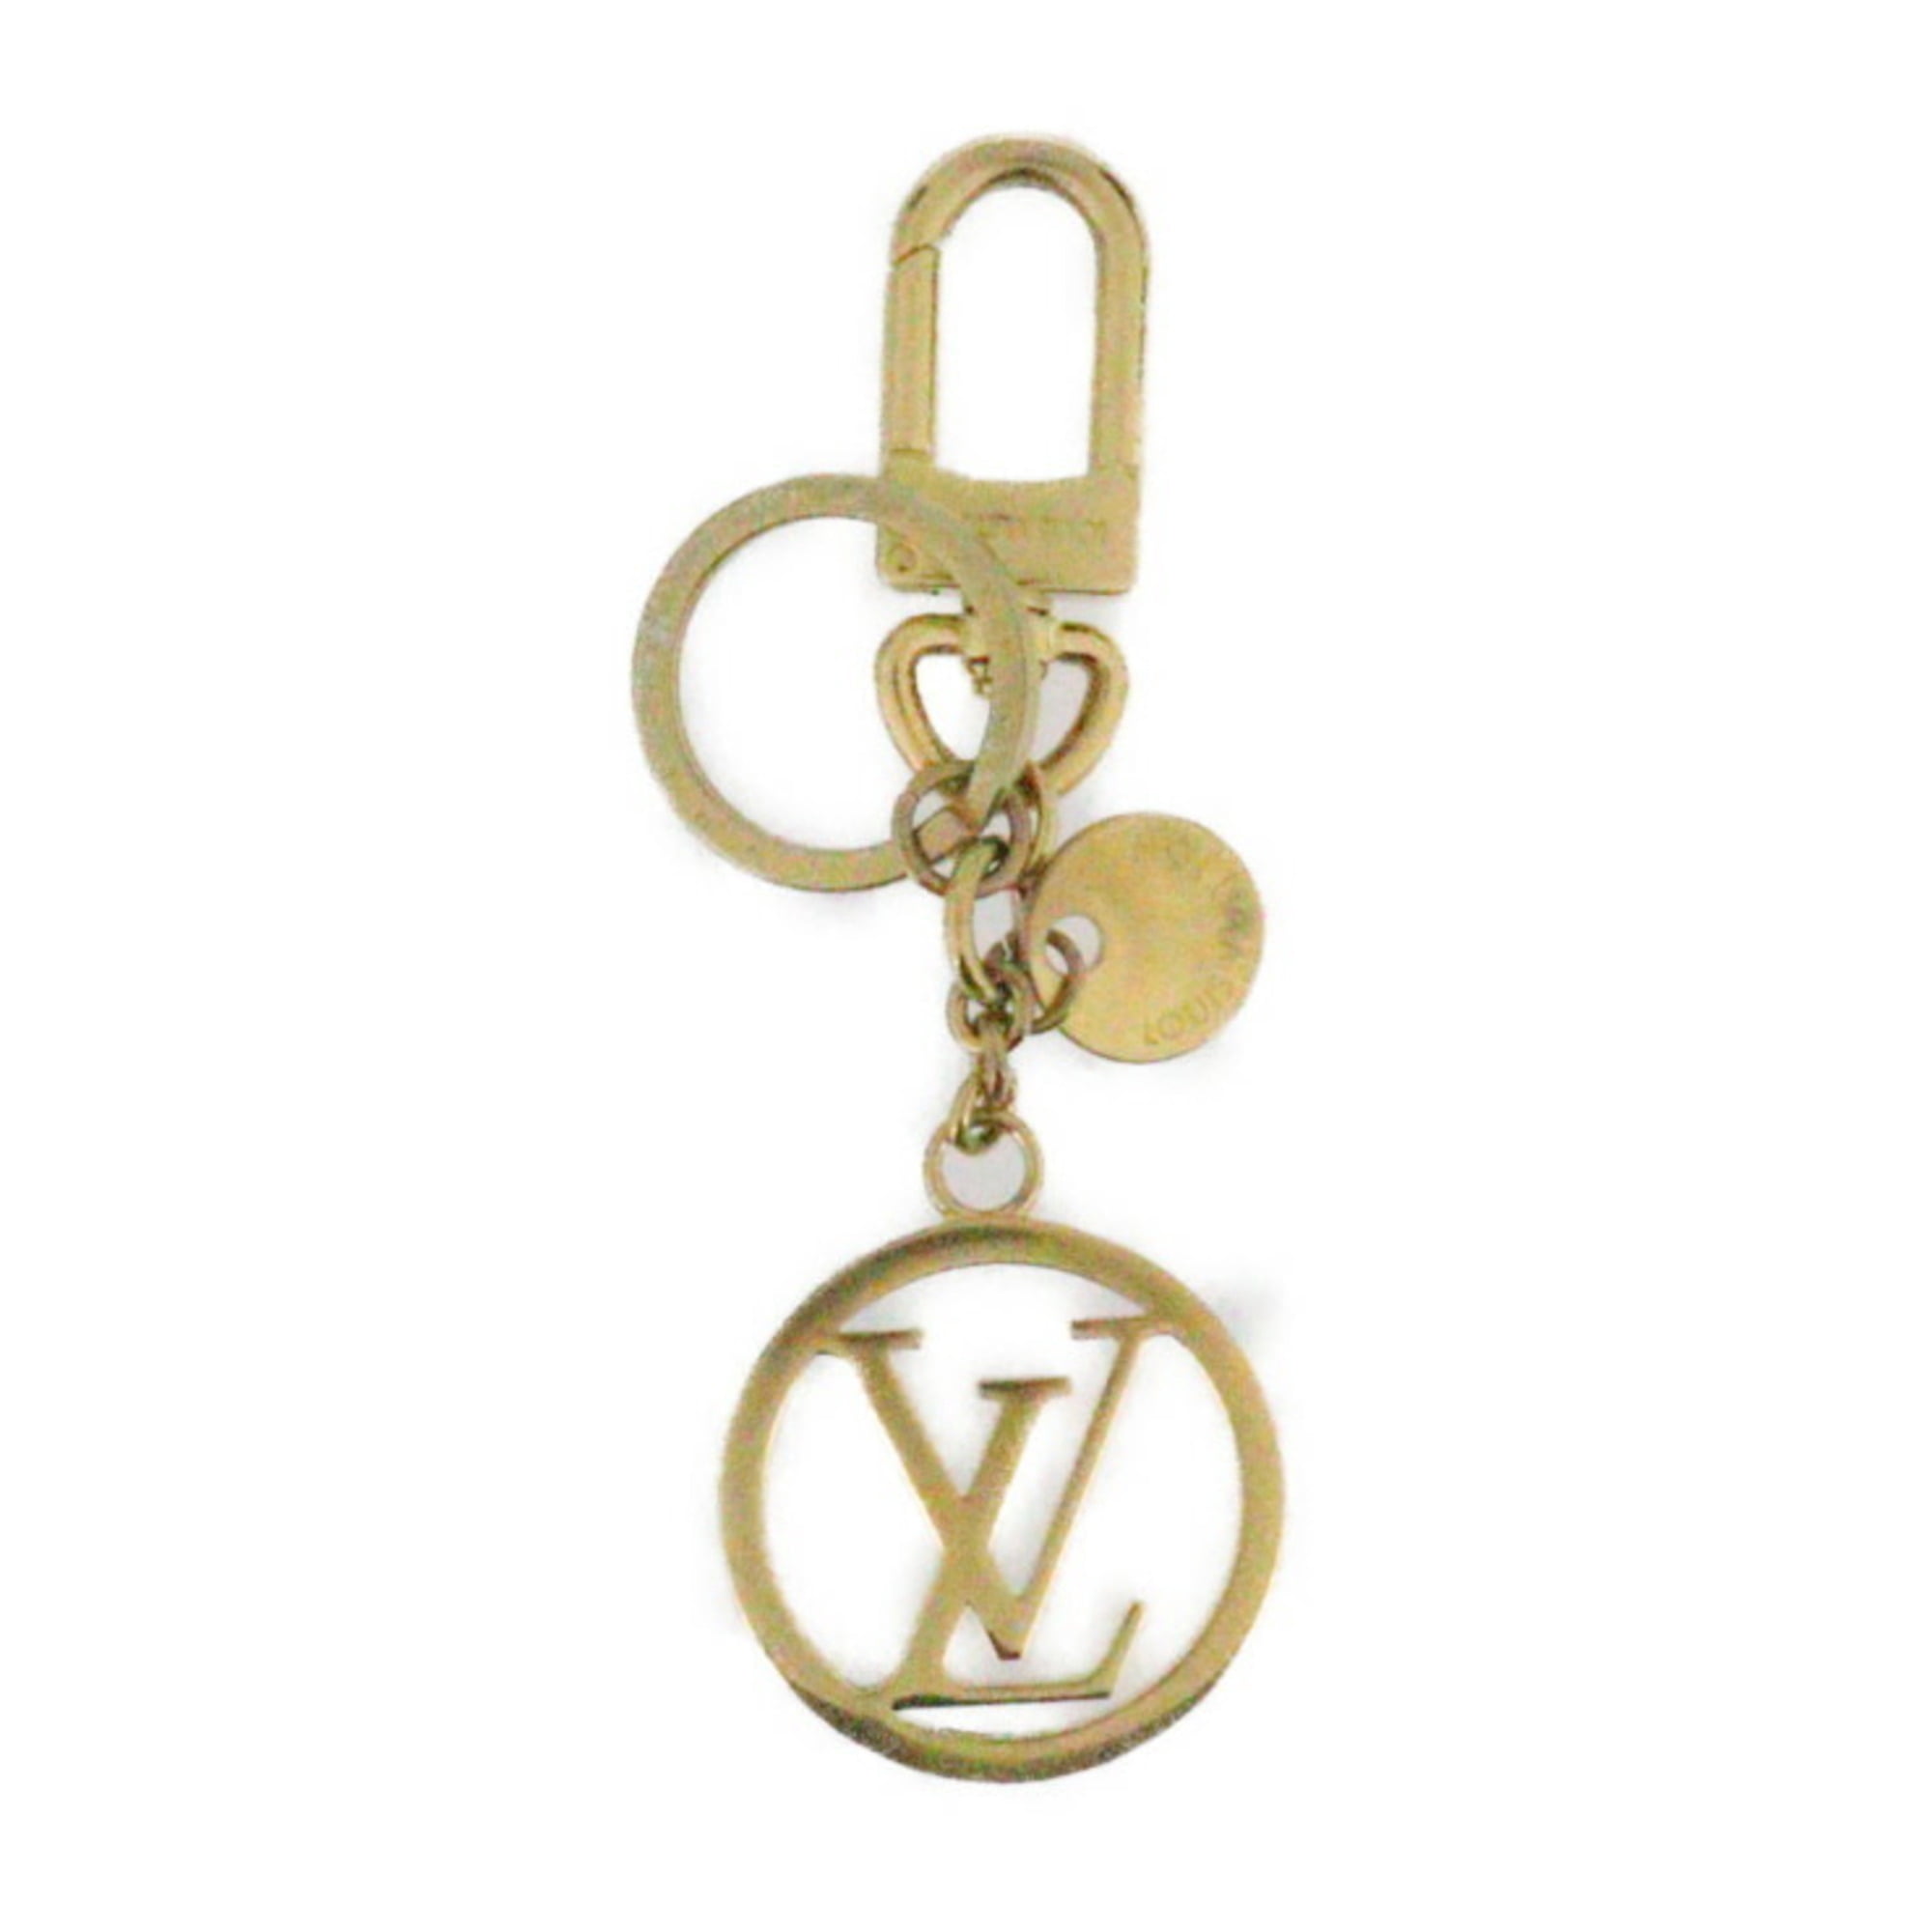 UPDATE Louis Vuitton phone ring holder